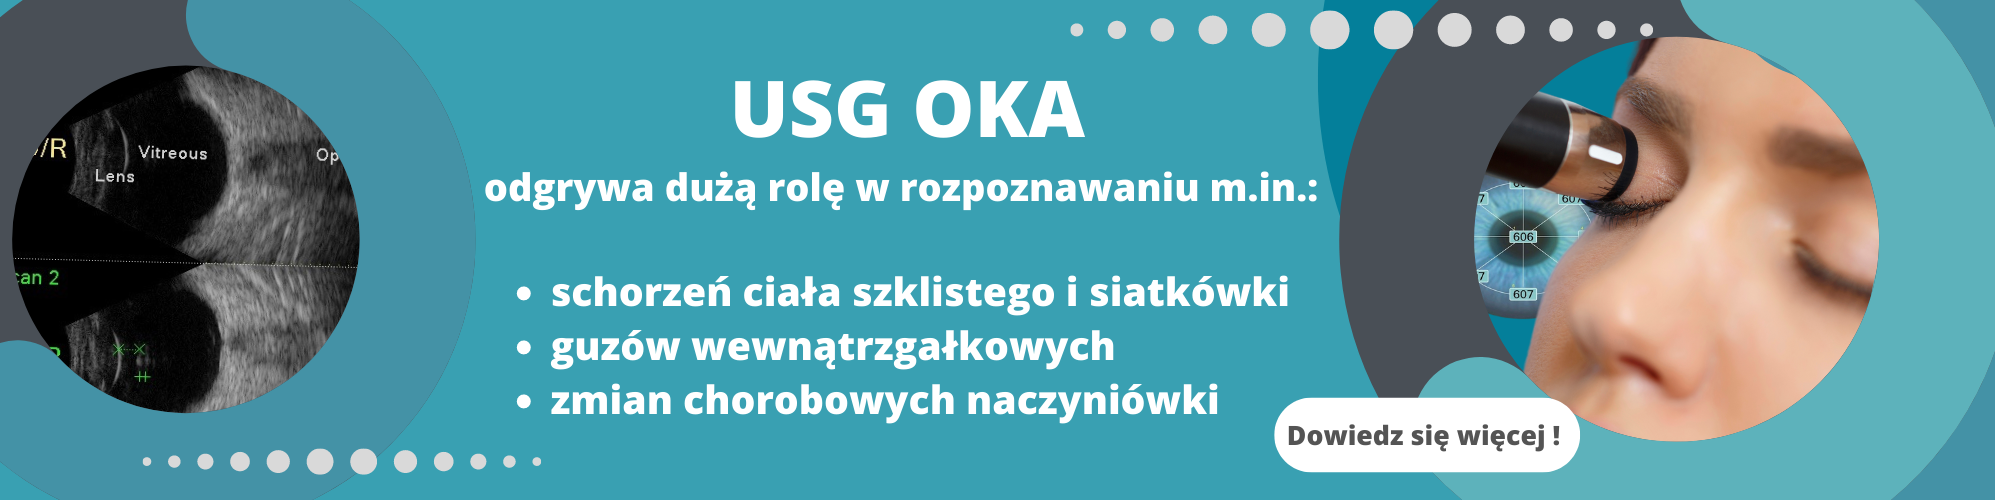 Diagnostyka ultrasonograficzna - USG oka - cmkasprzaka.pl